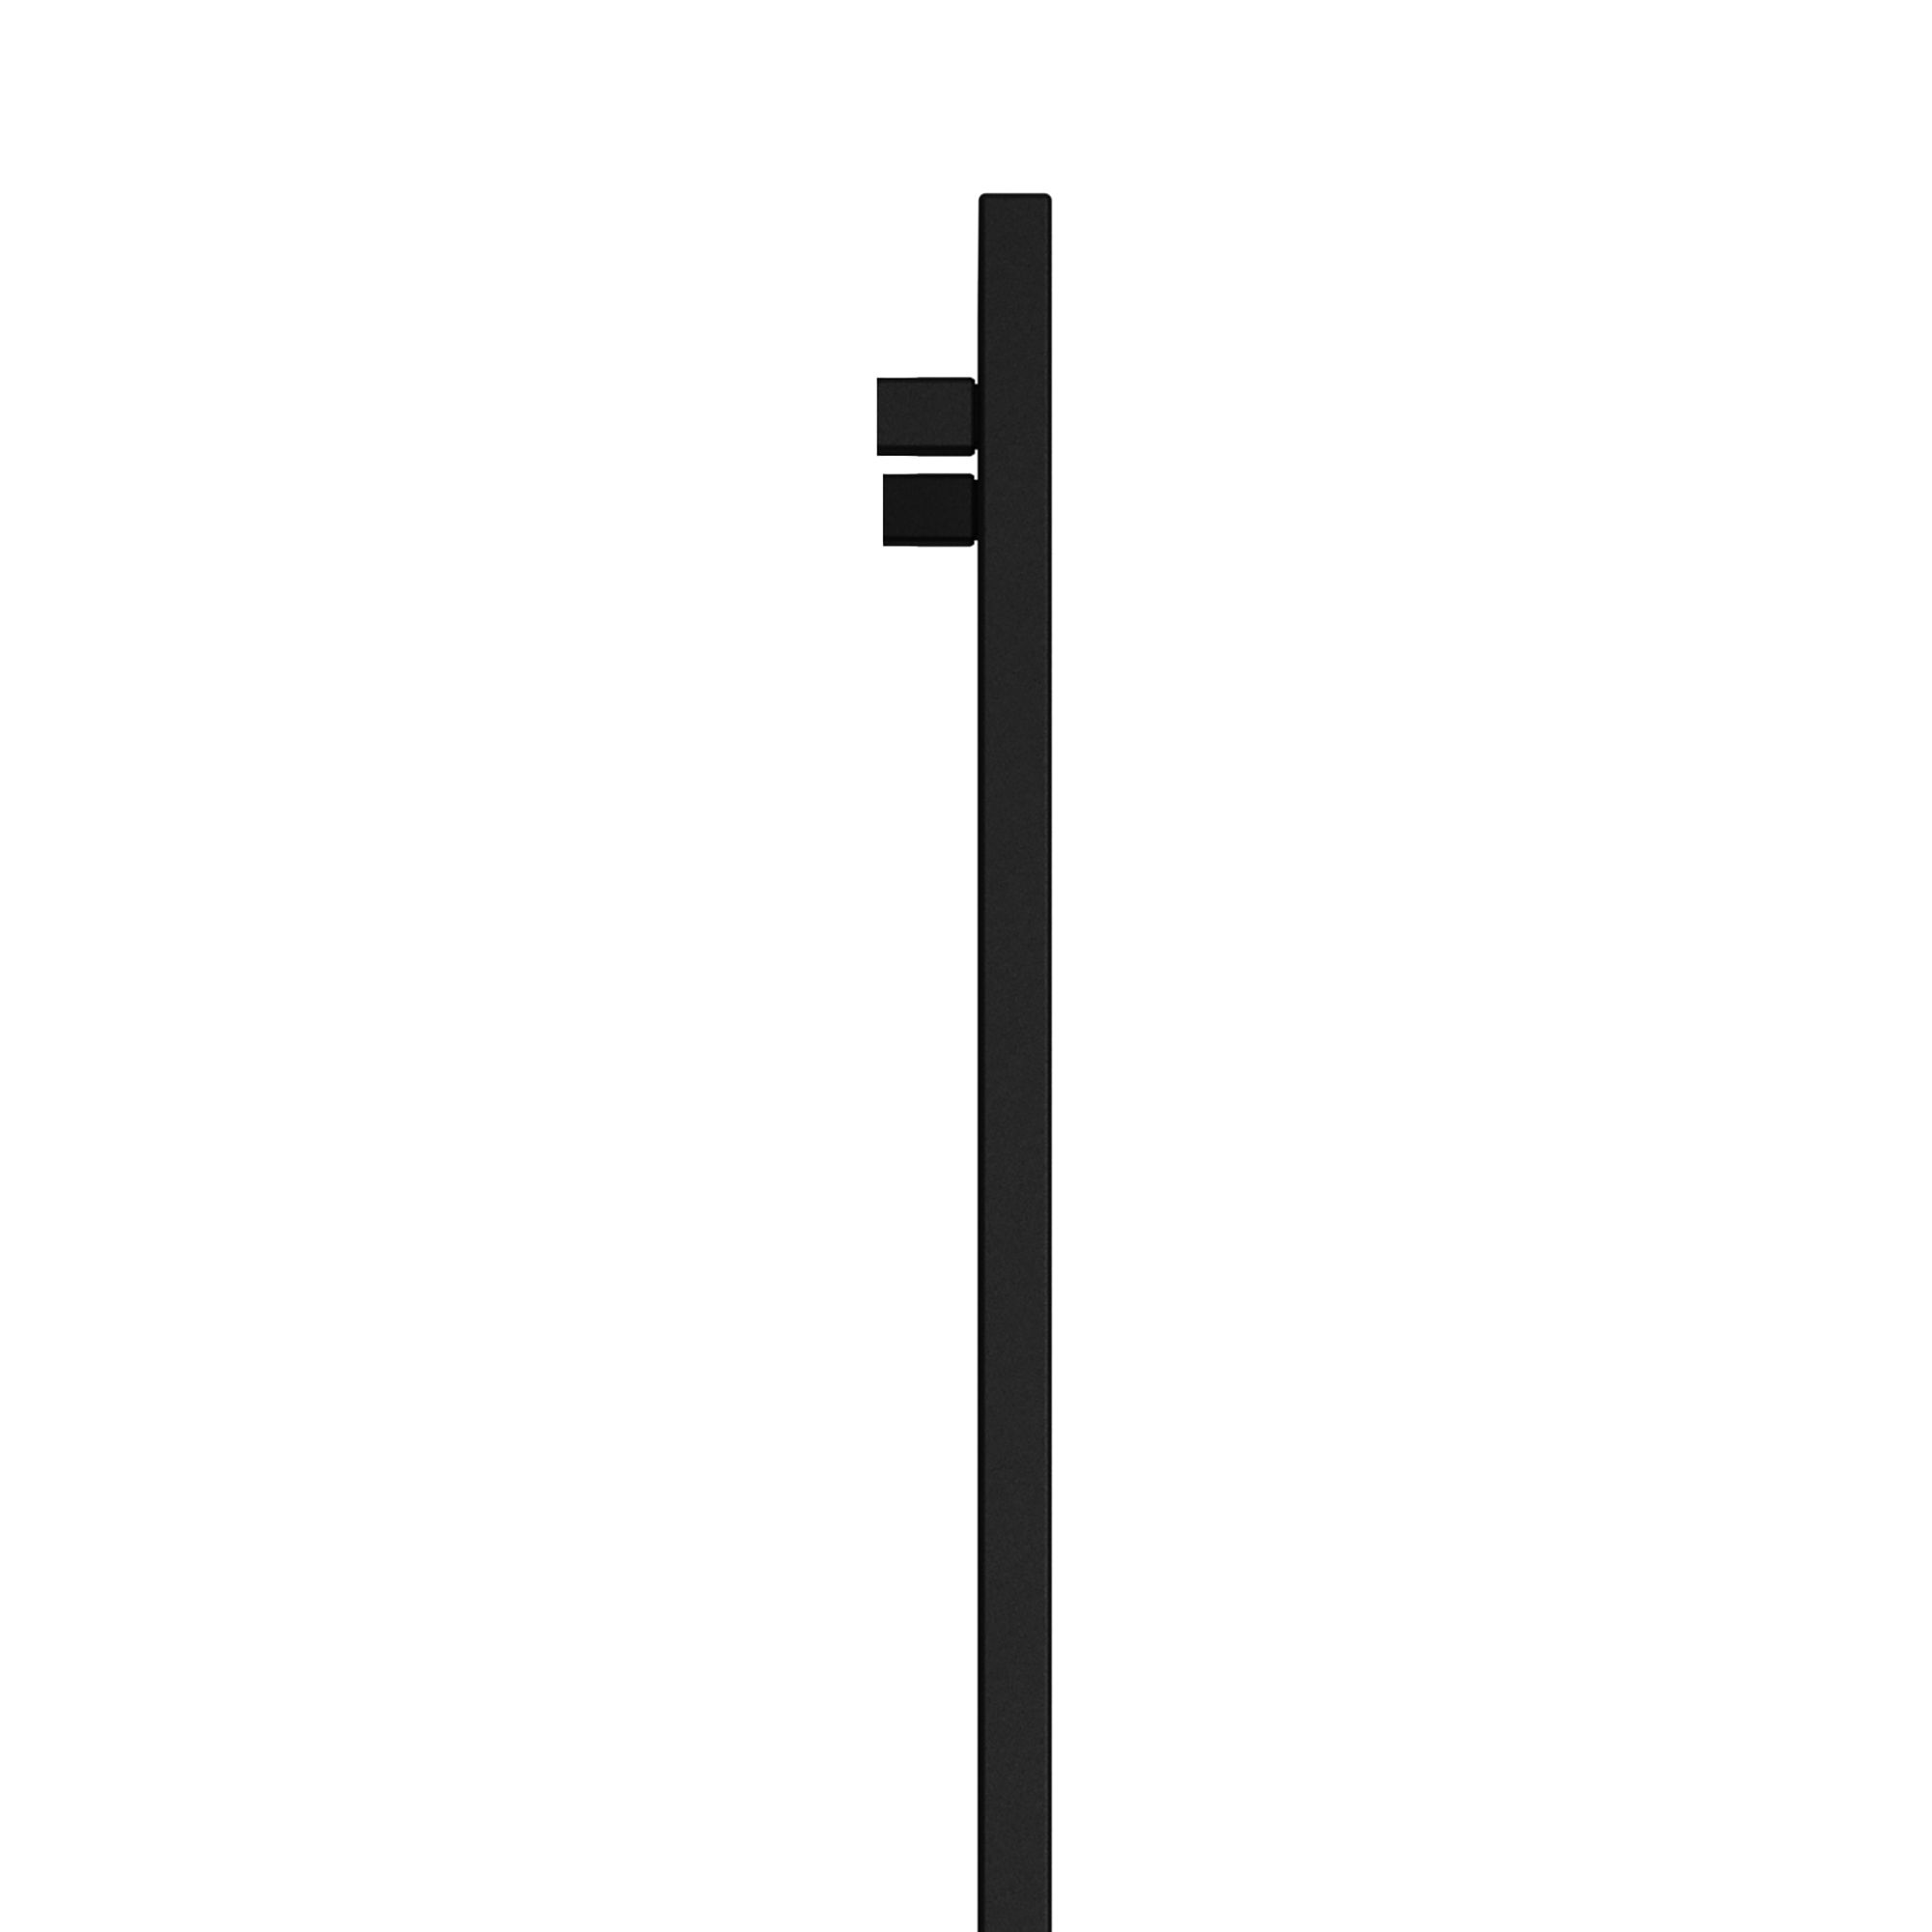 Terma Angus Satin black Vertical Designer Radiator, (W)440mm x (H)1300mm